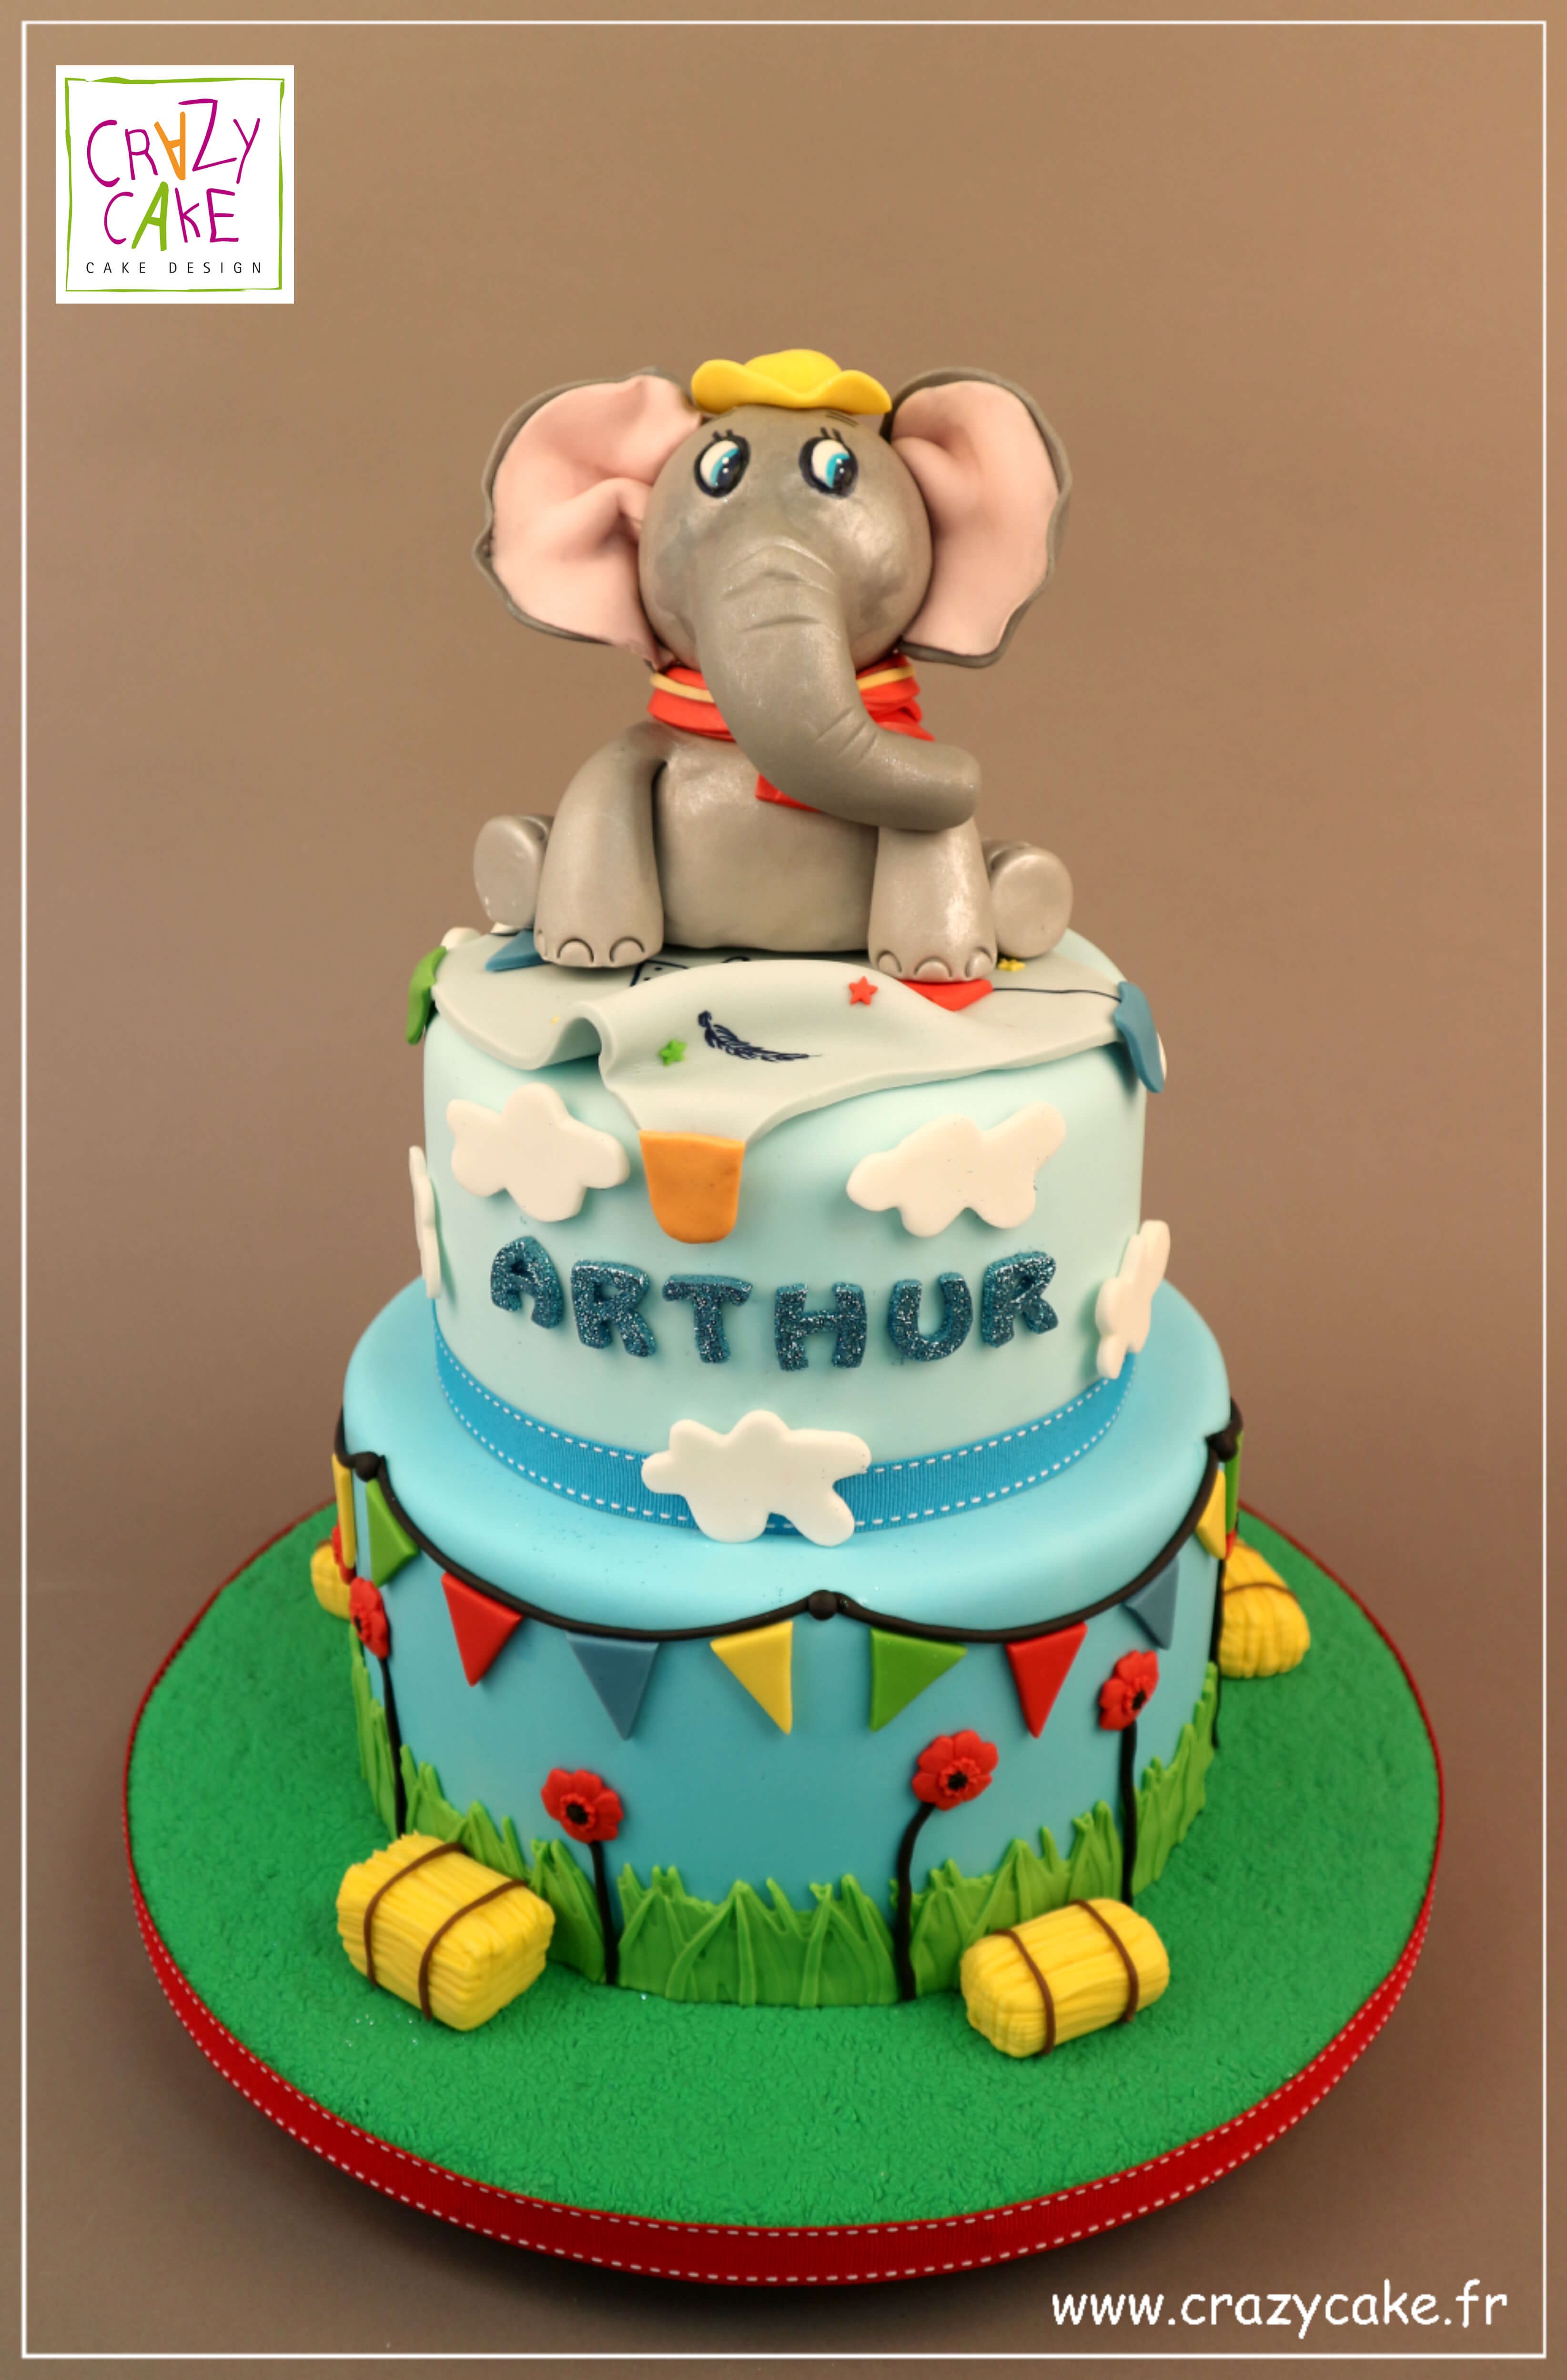 Gâteau de baptême "Dumbo"